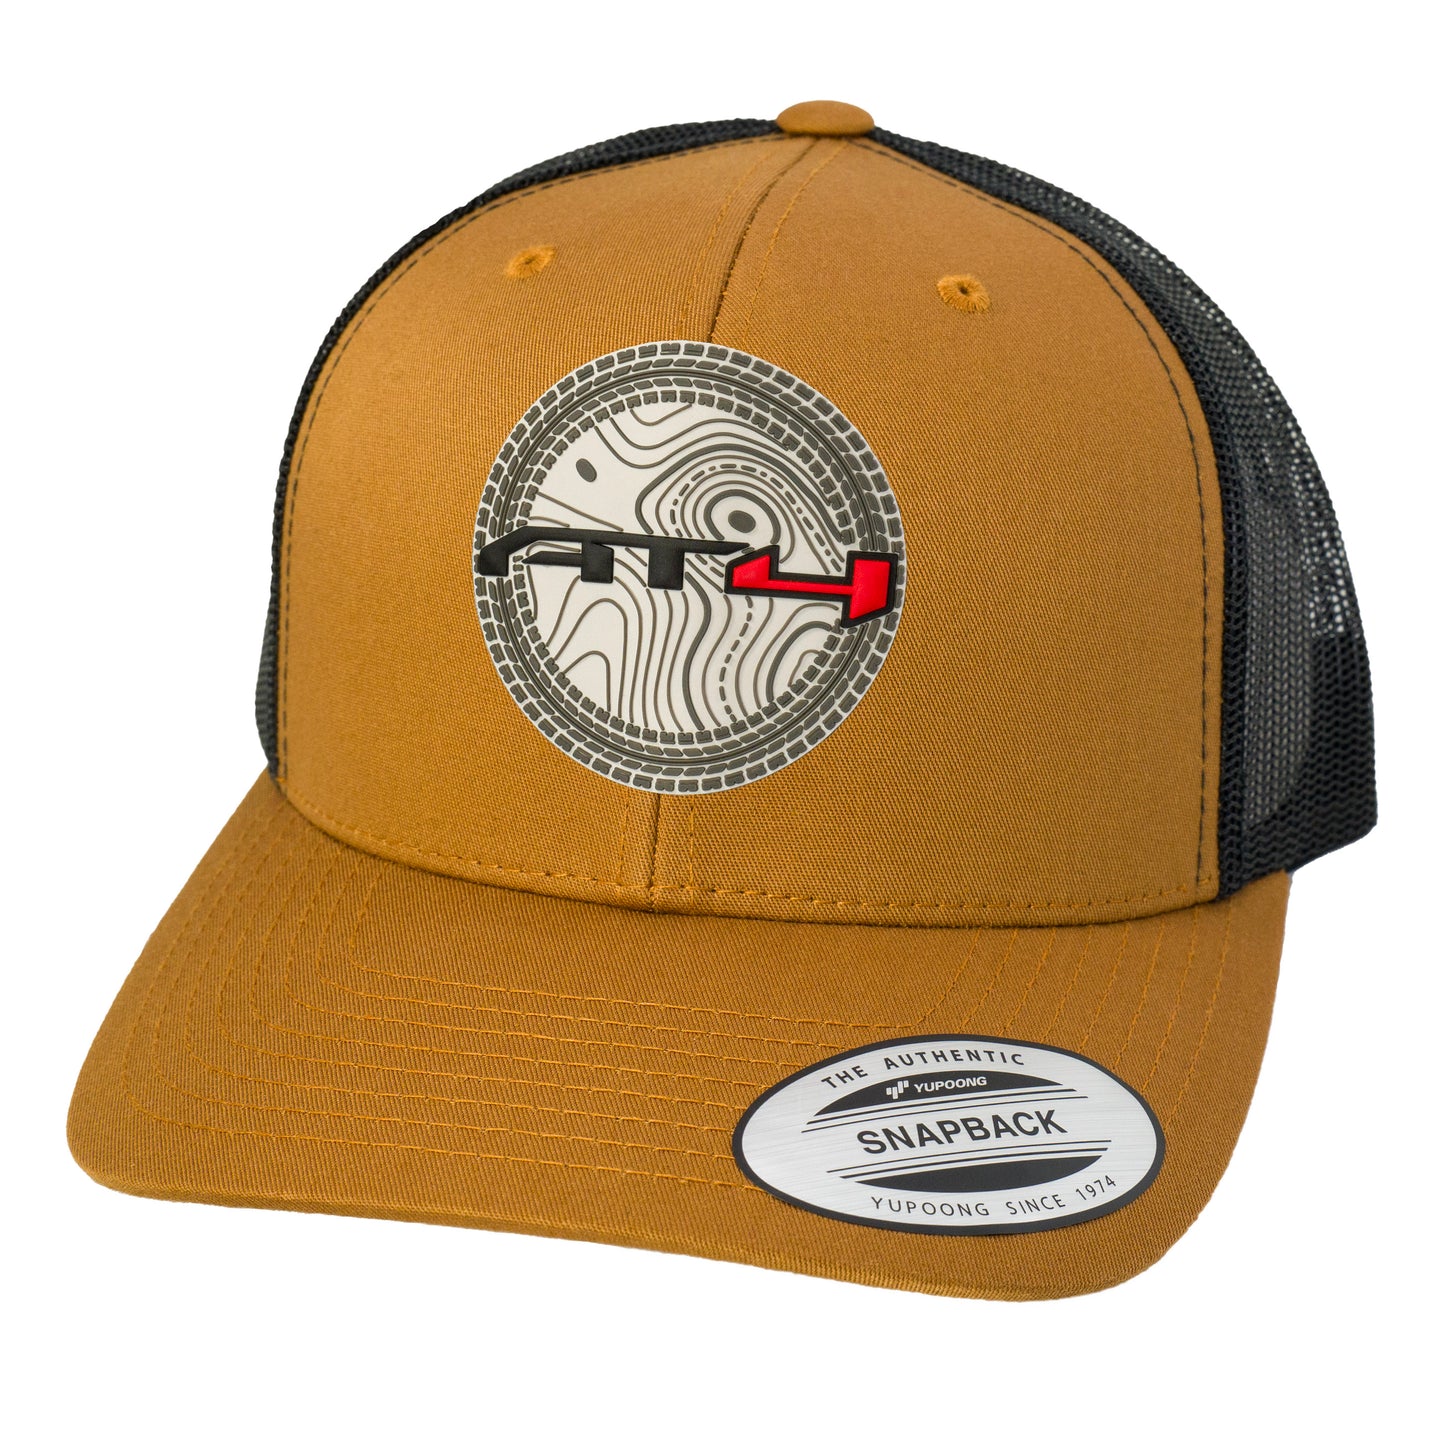 AT4 3D YP Snapback Trucker Hat- Caramel/ Black - Ten Gallon Hat Co.